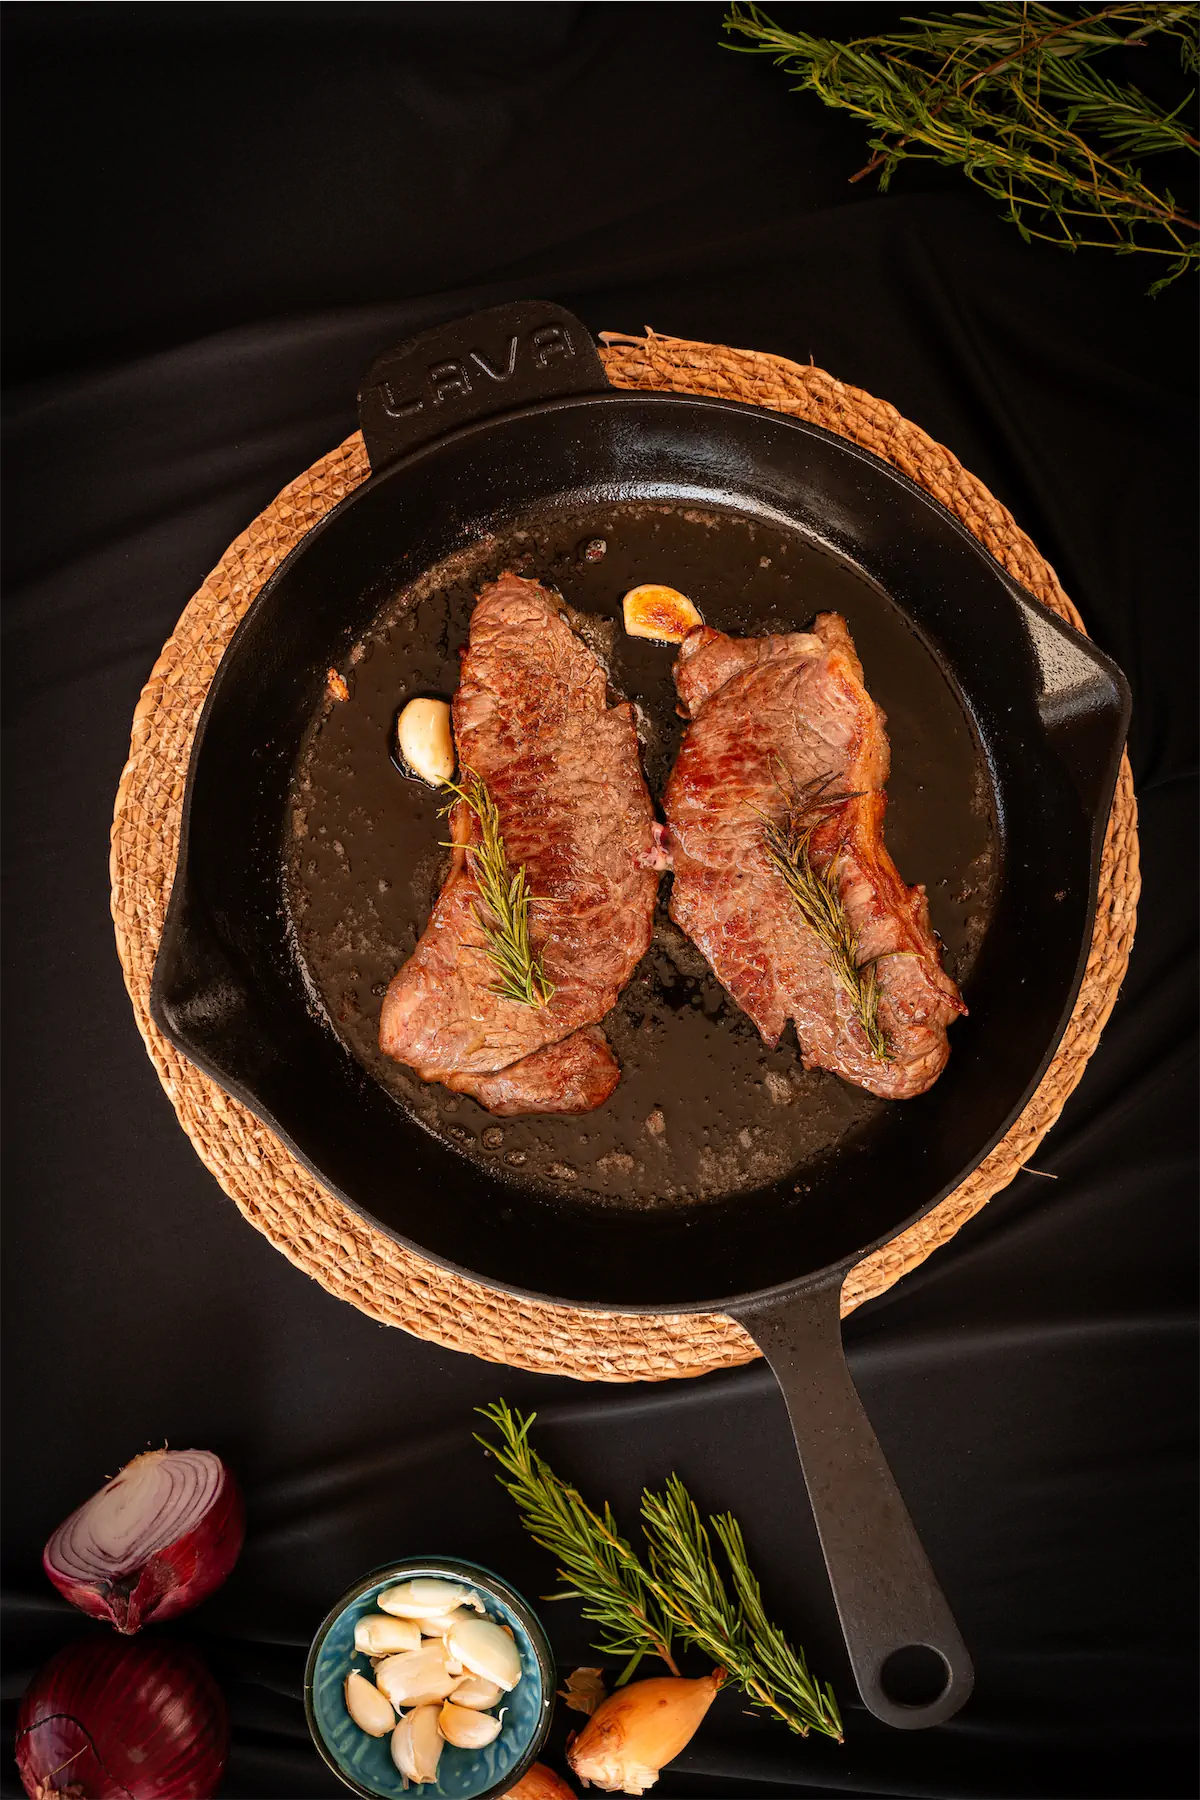 Steak on a pan seasoned with rosemary.